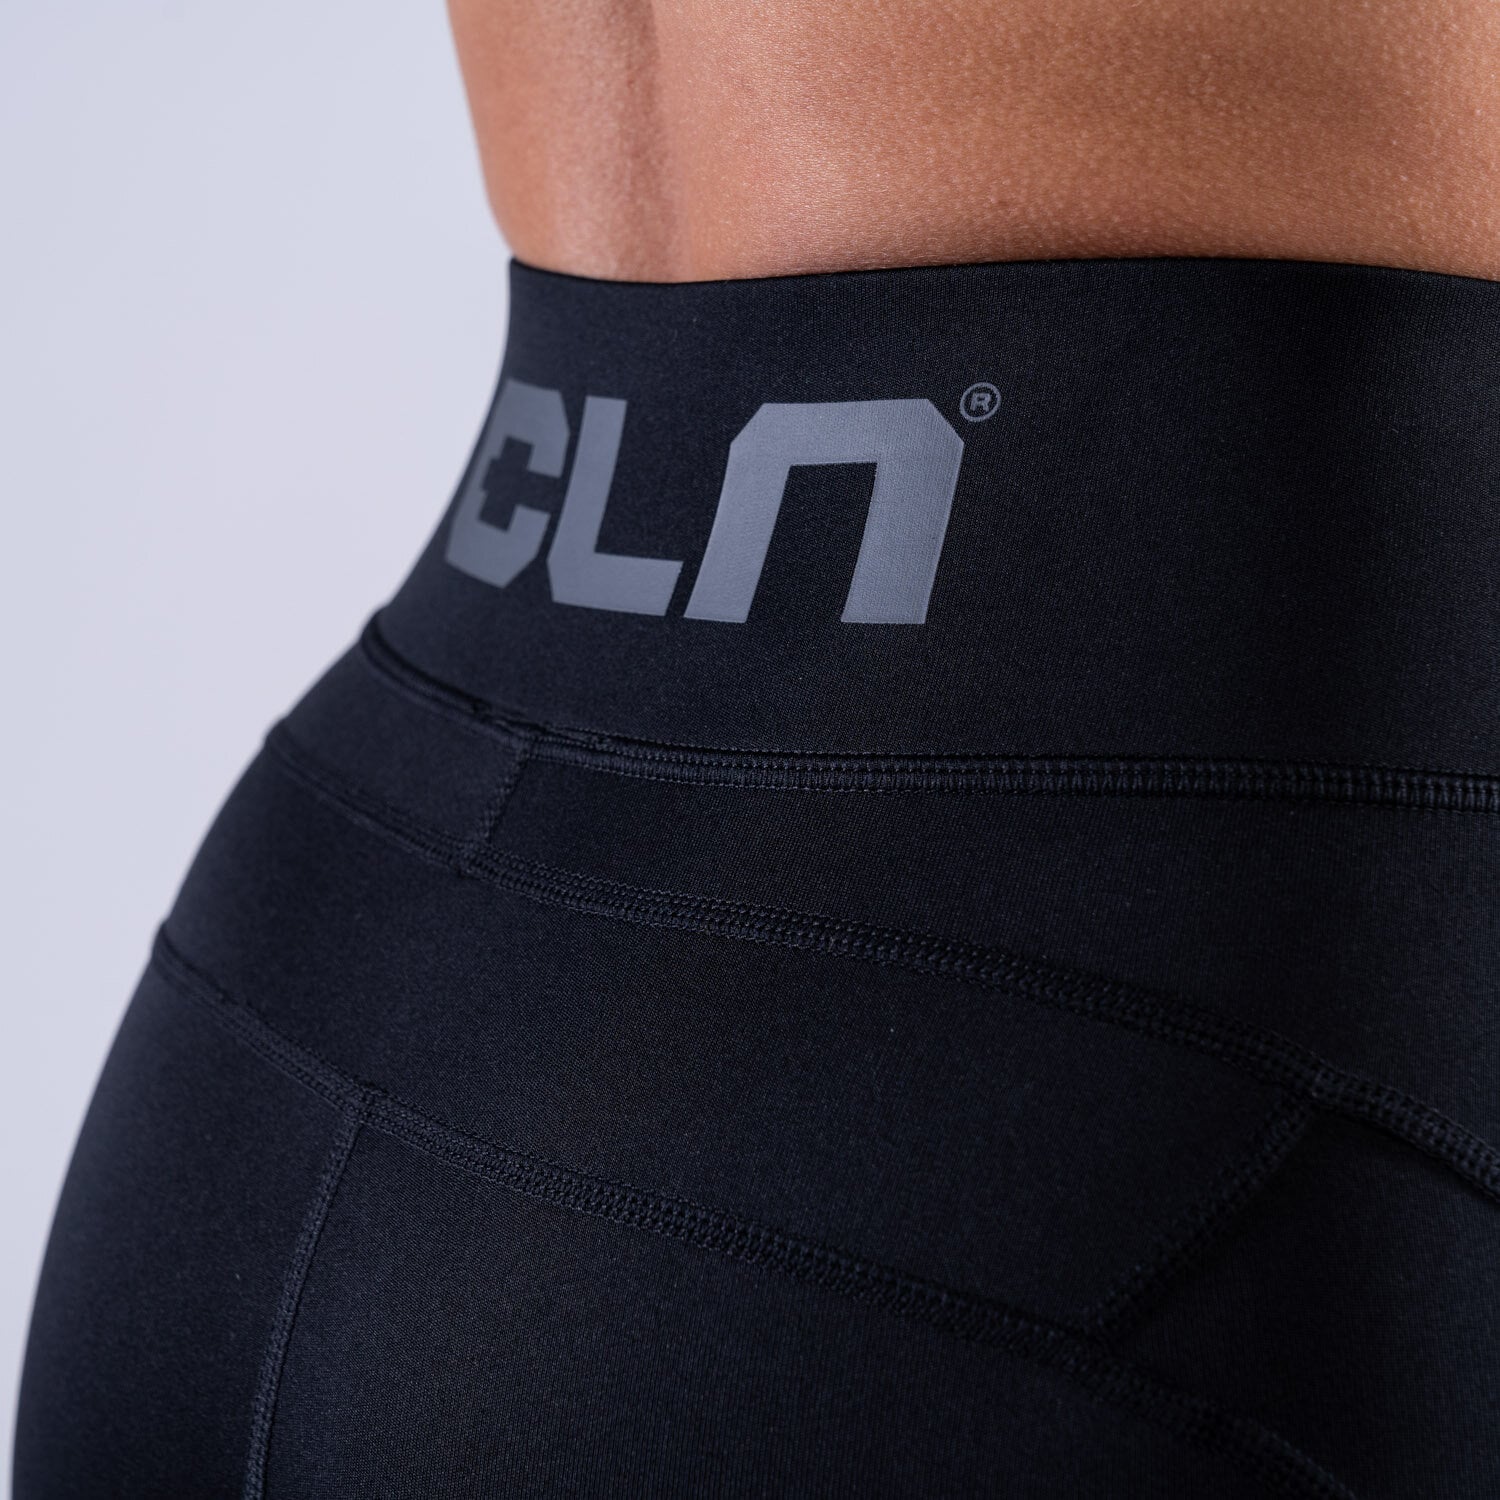 CLN Activate ws tights Black